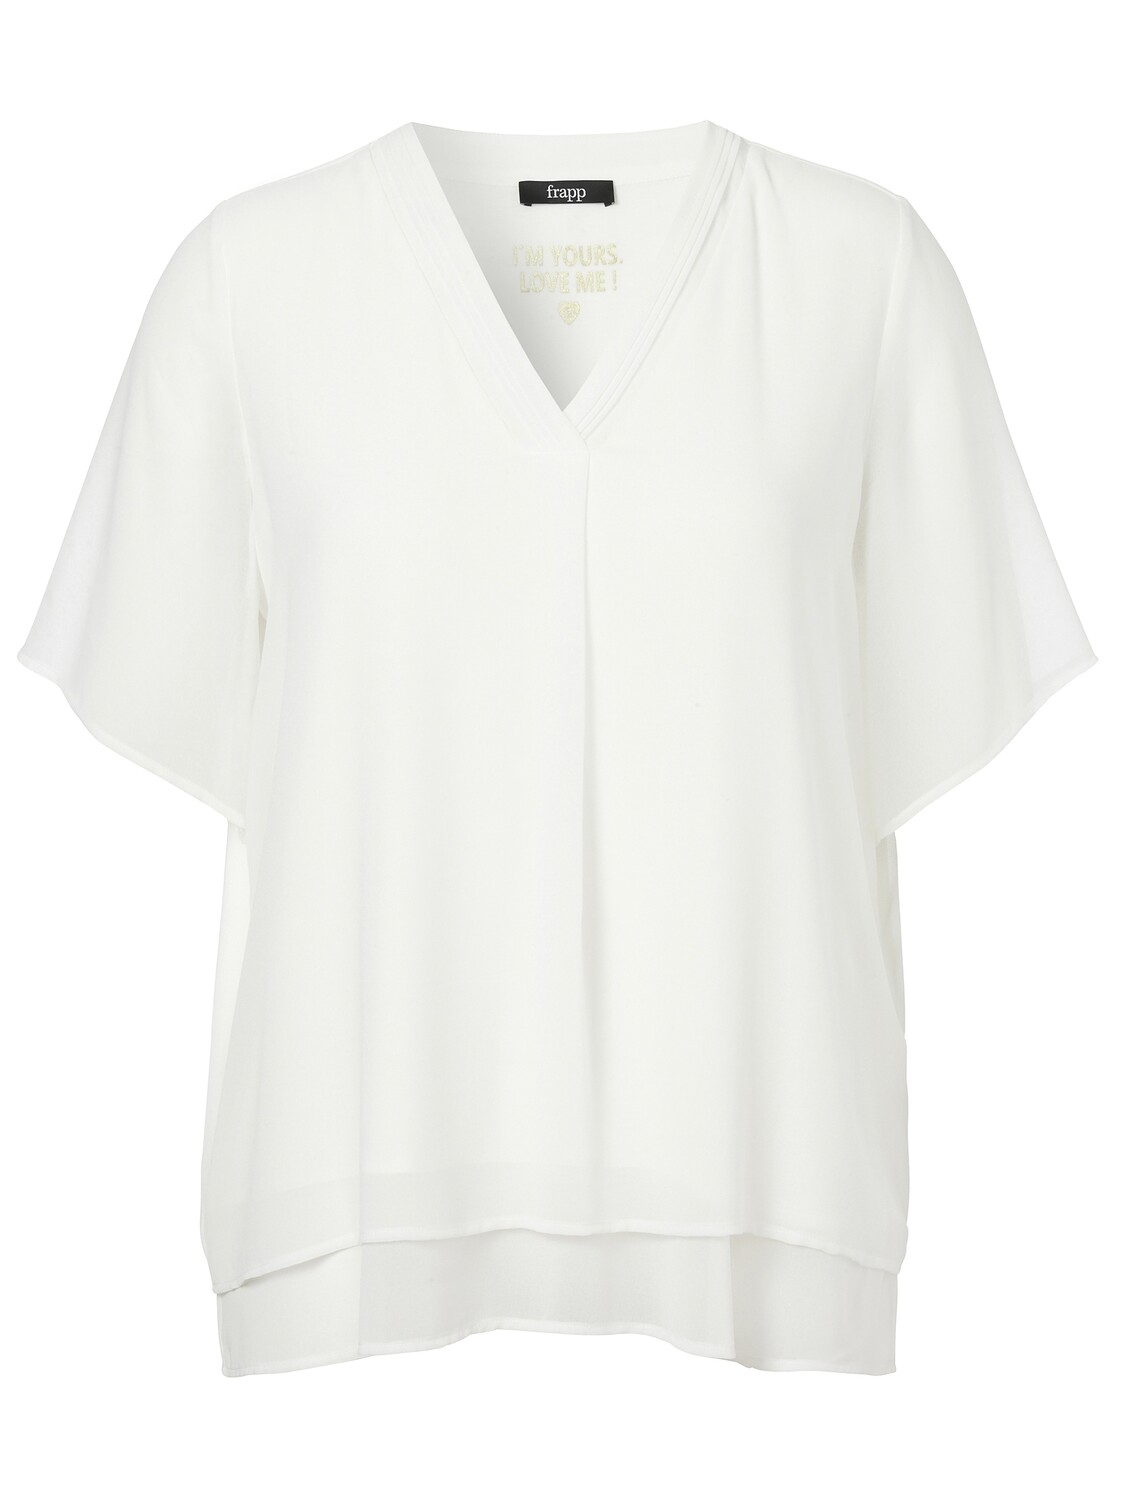 Frapp blouse ecru 2461720, Size: 44